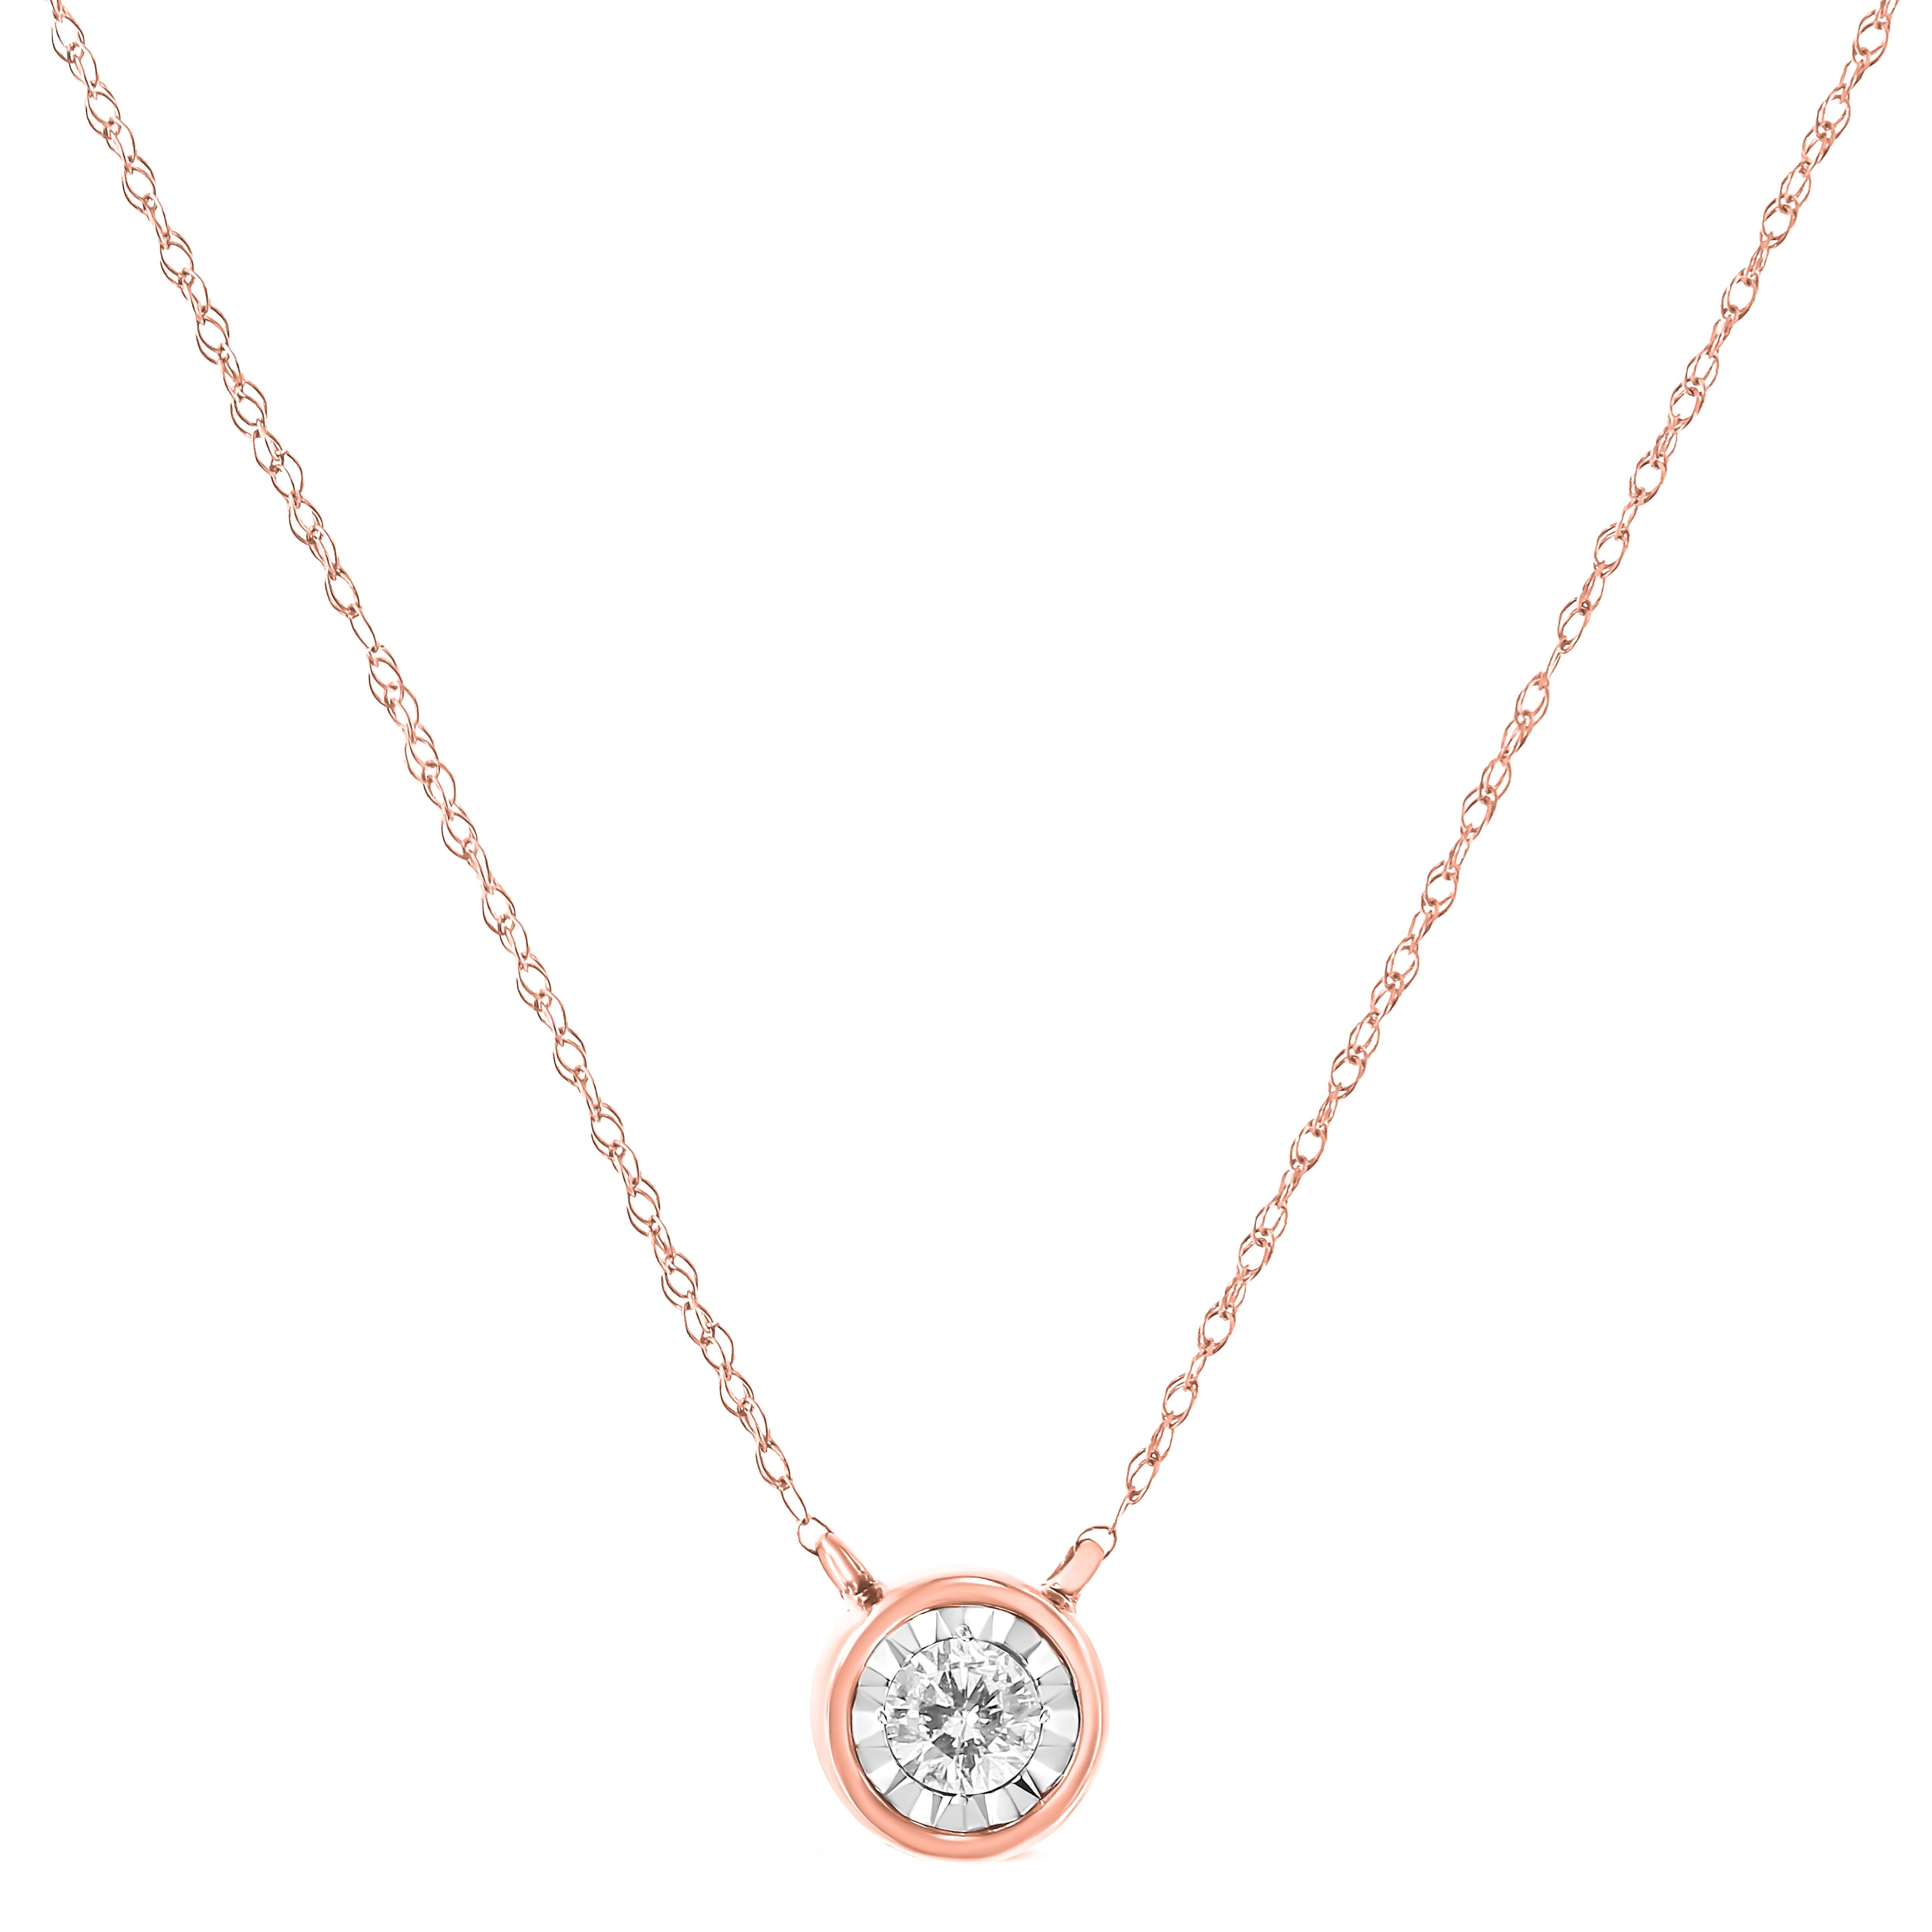 5 carat diamond solitaire necklace